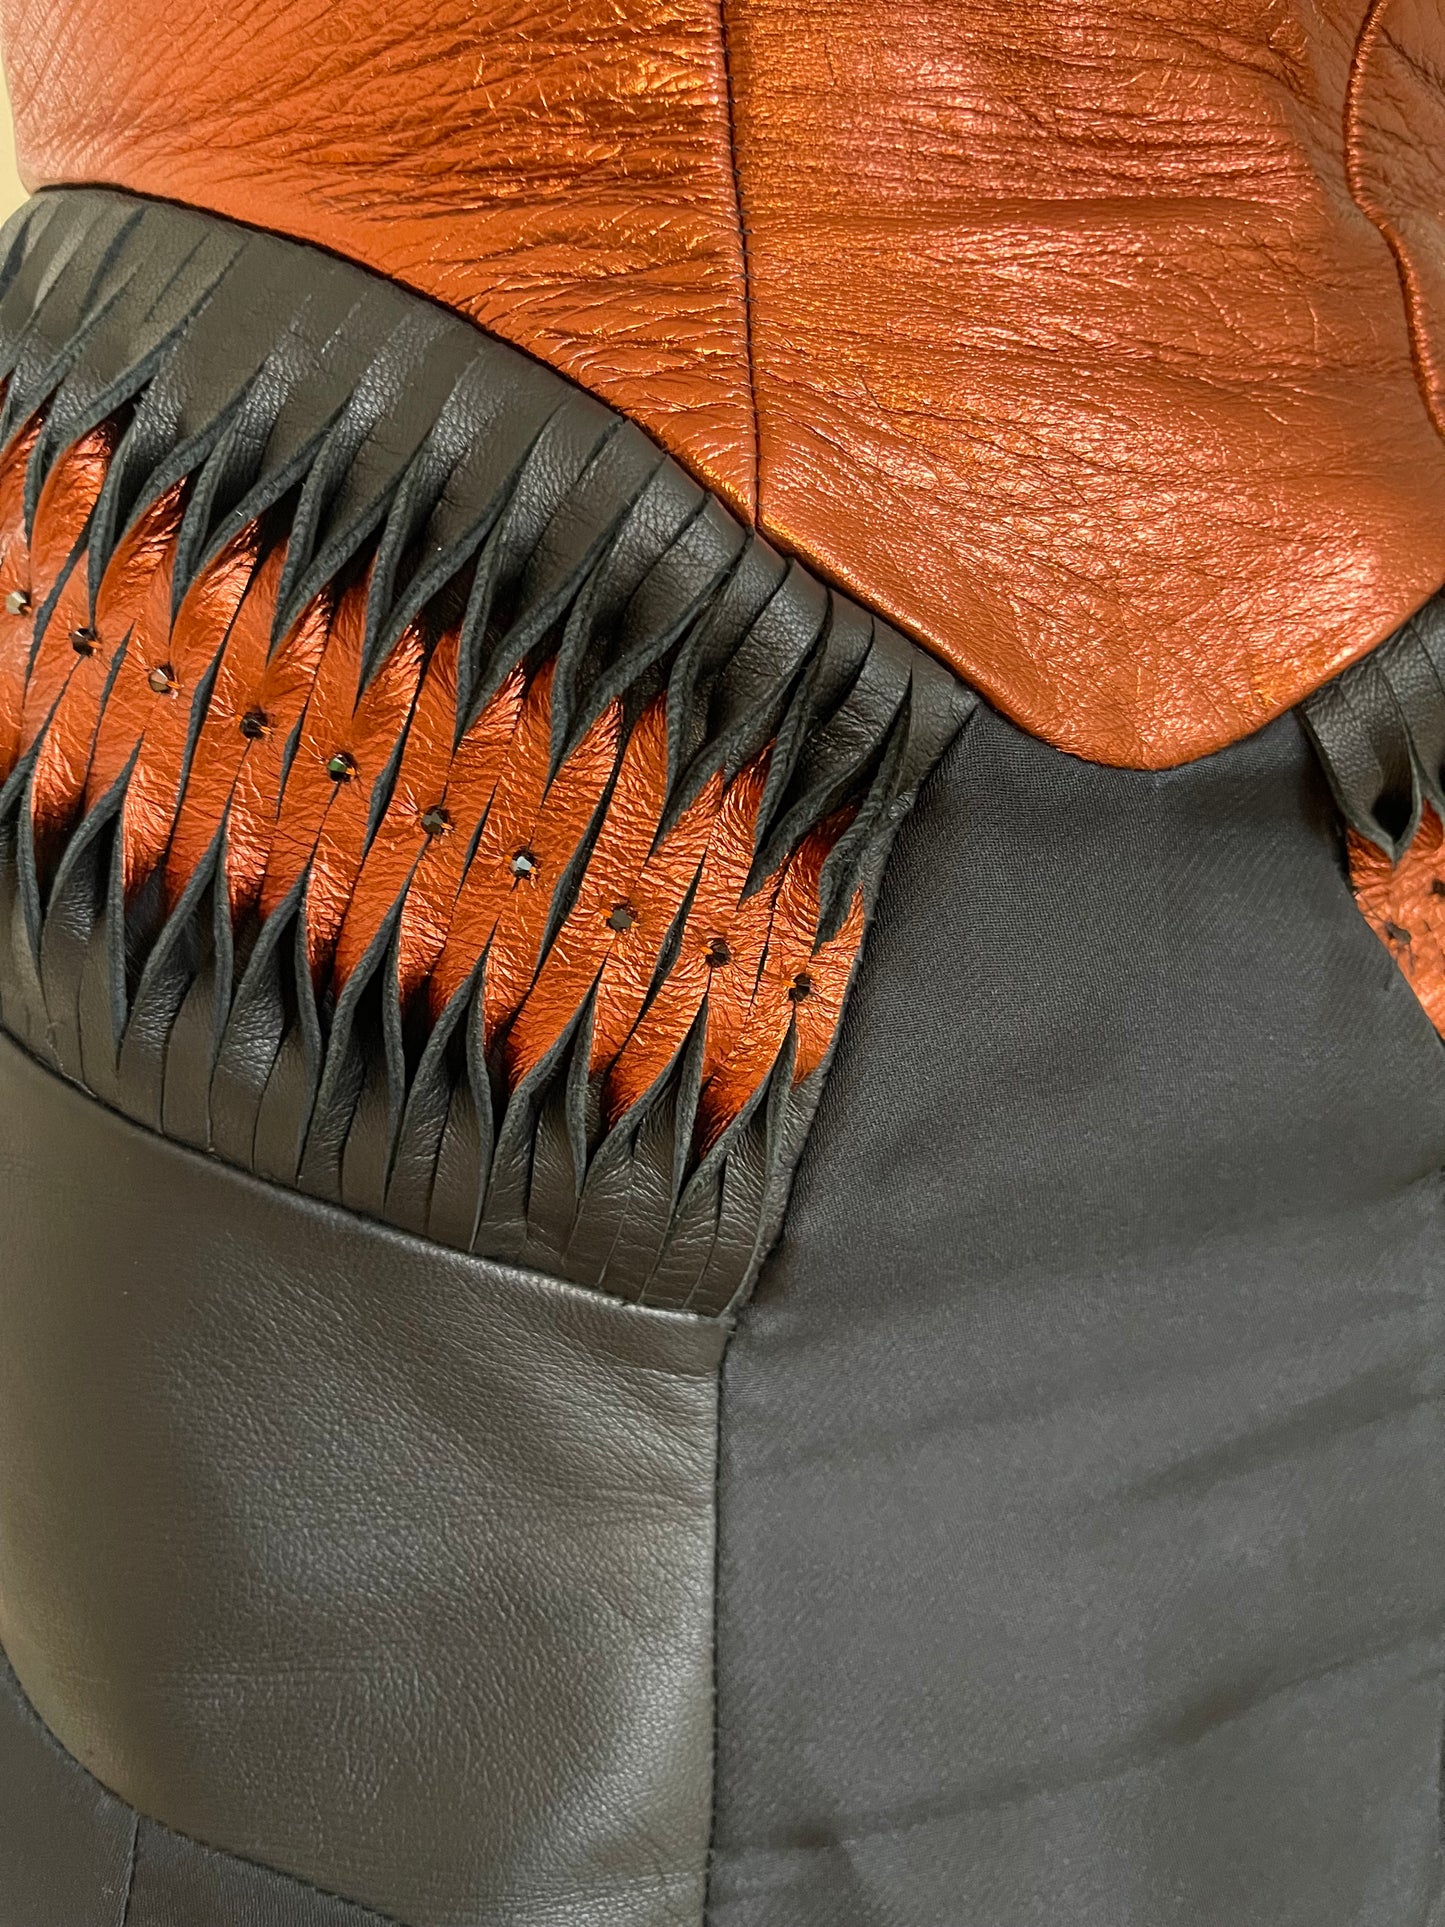 PRITCH London - Silk and Leather Dress - Size UK10 (US6)